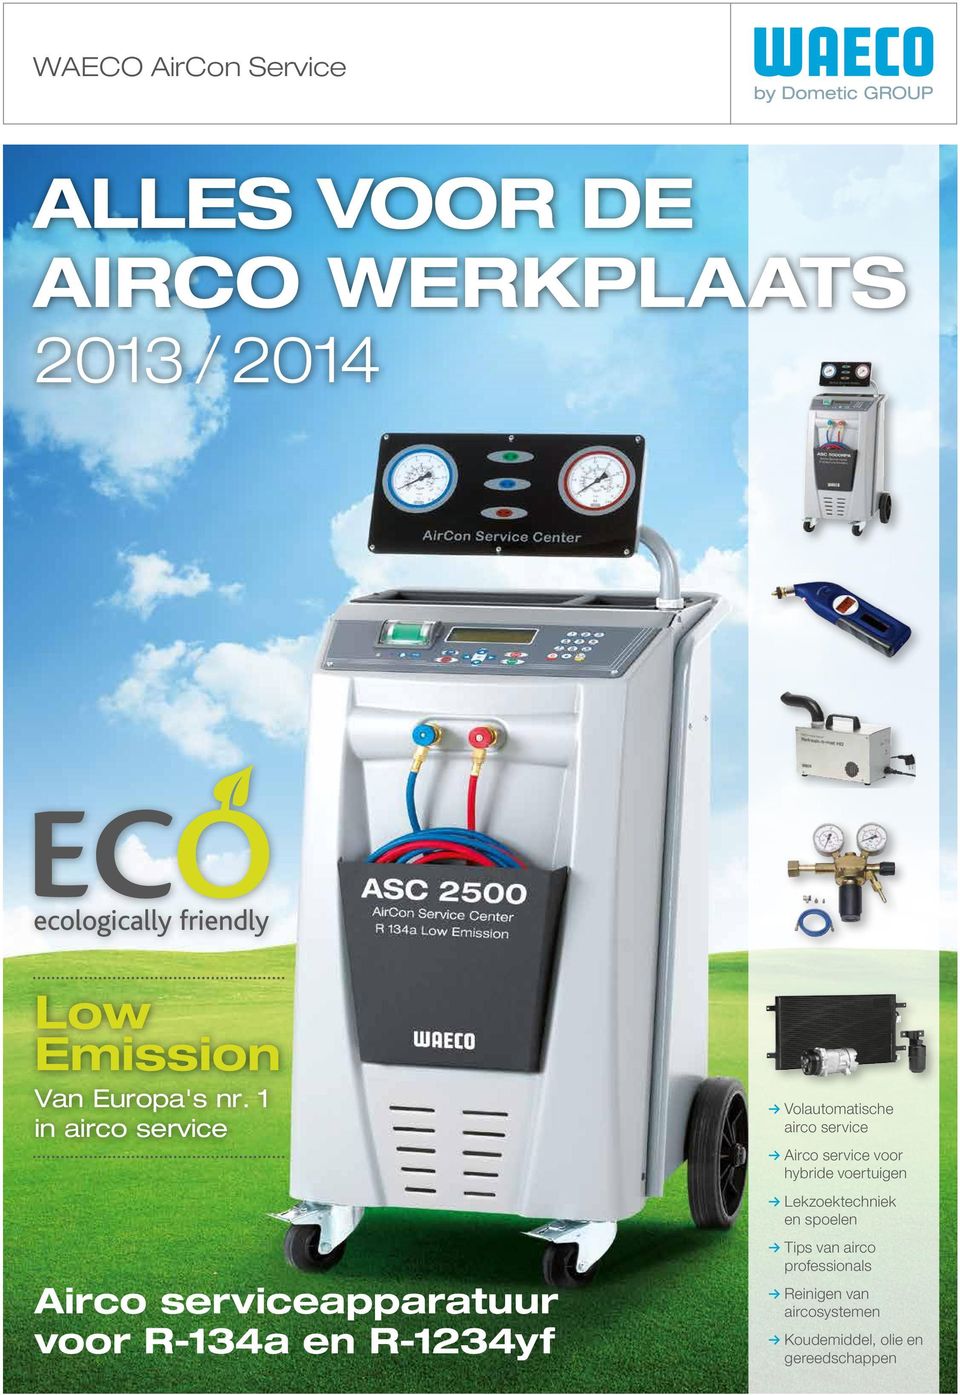 1 in airco service Volautomatische airco service Airco service voor hybride voertuigen